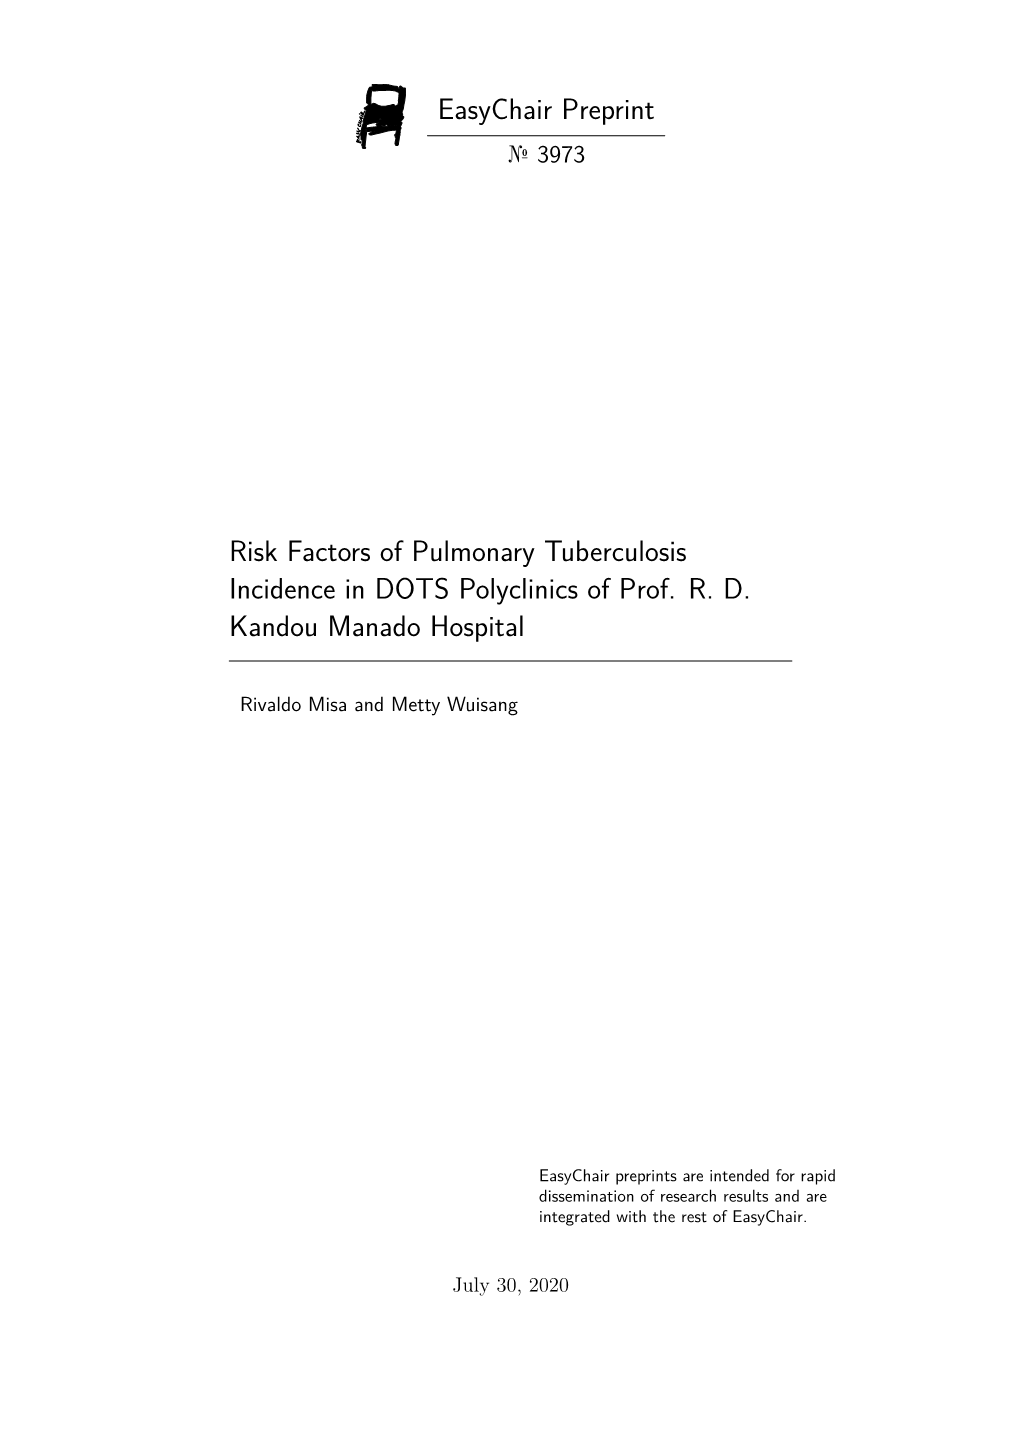 Easychair Preprint Risk Factors of Pulmonary Tuberculosis Incidence in DOTS Polyclinics of Prof. R. D. Kandou Manado Hospital